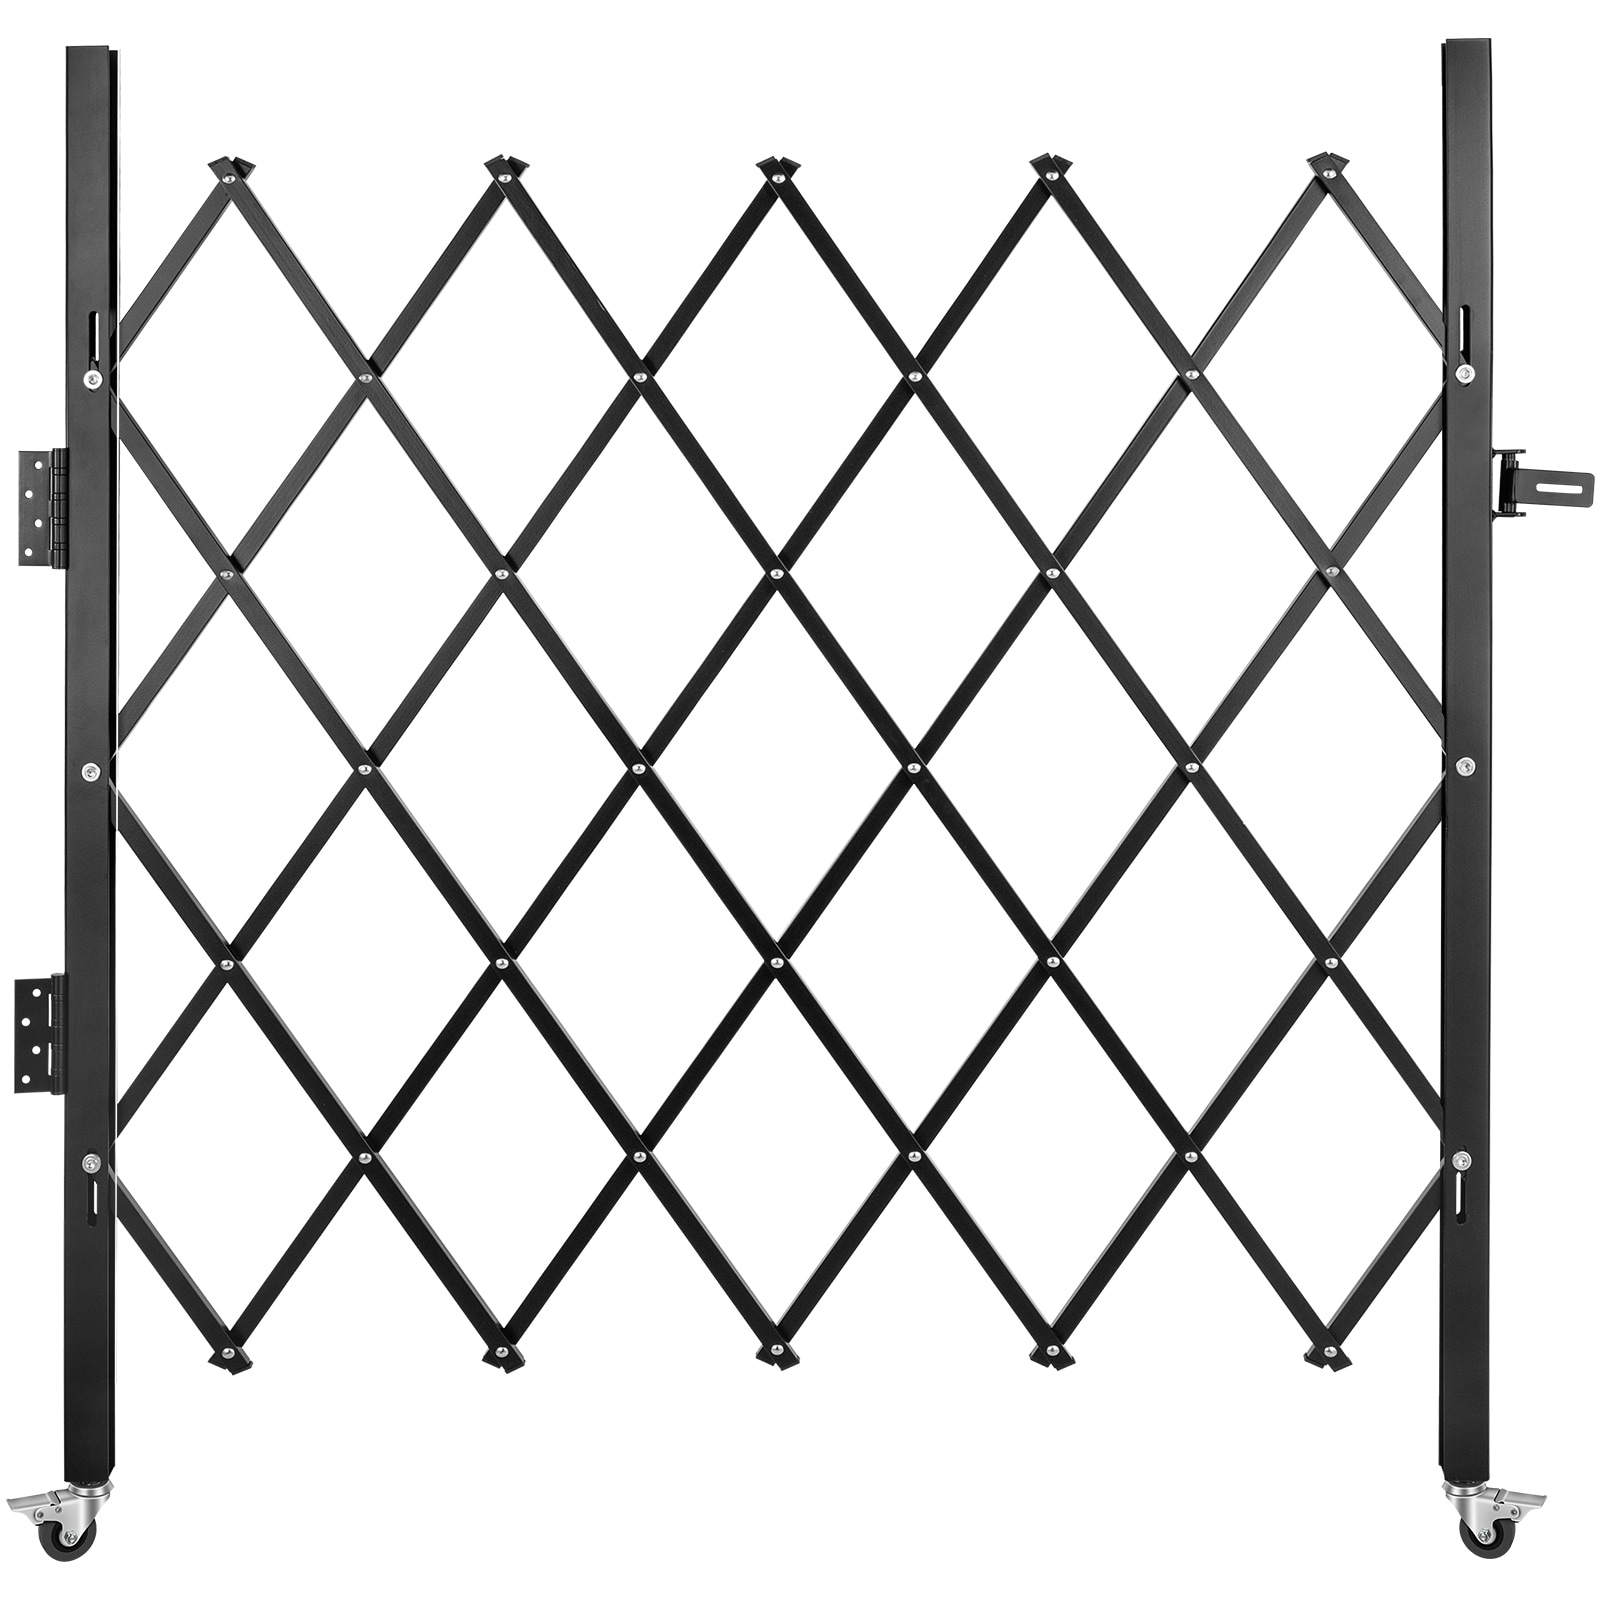 Composite Fence Panels at Lowes.com